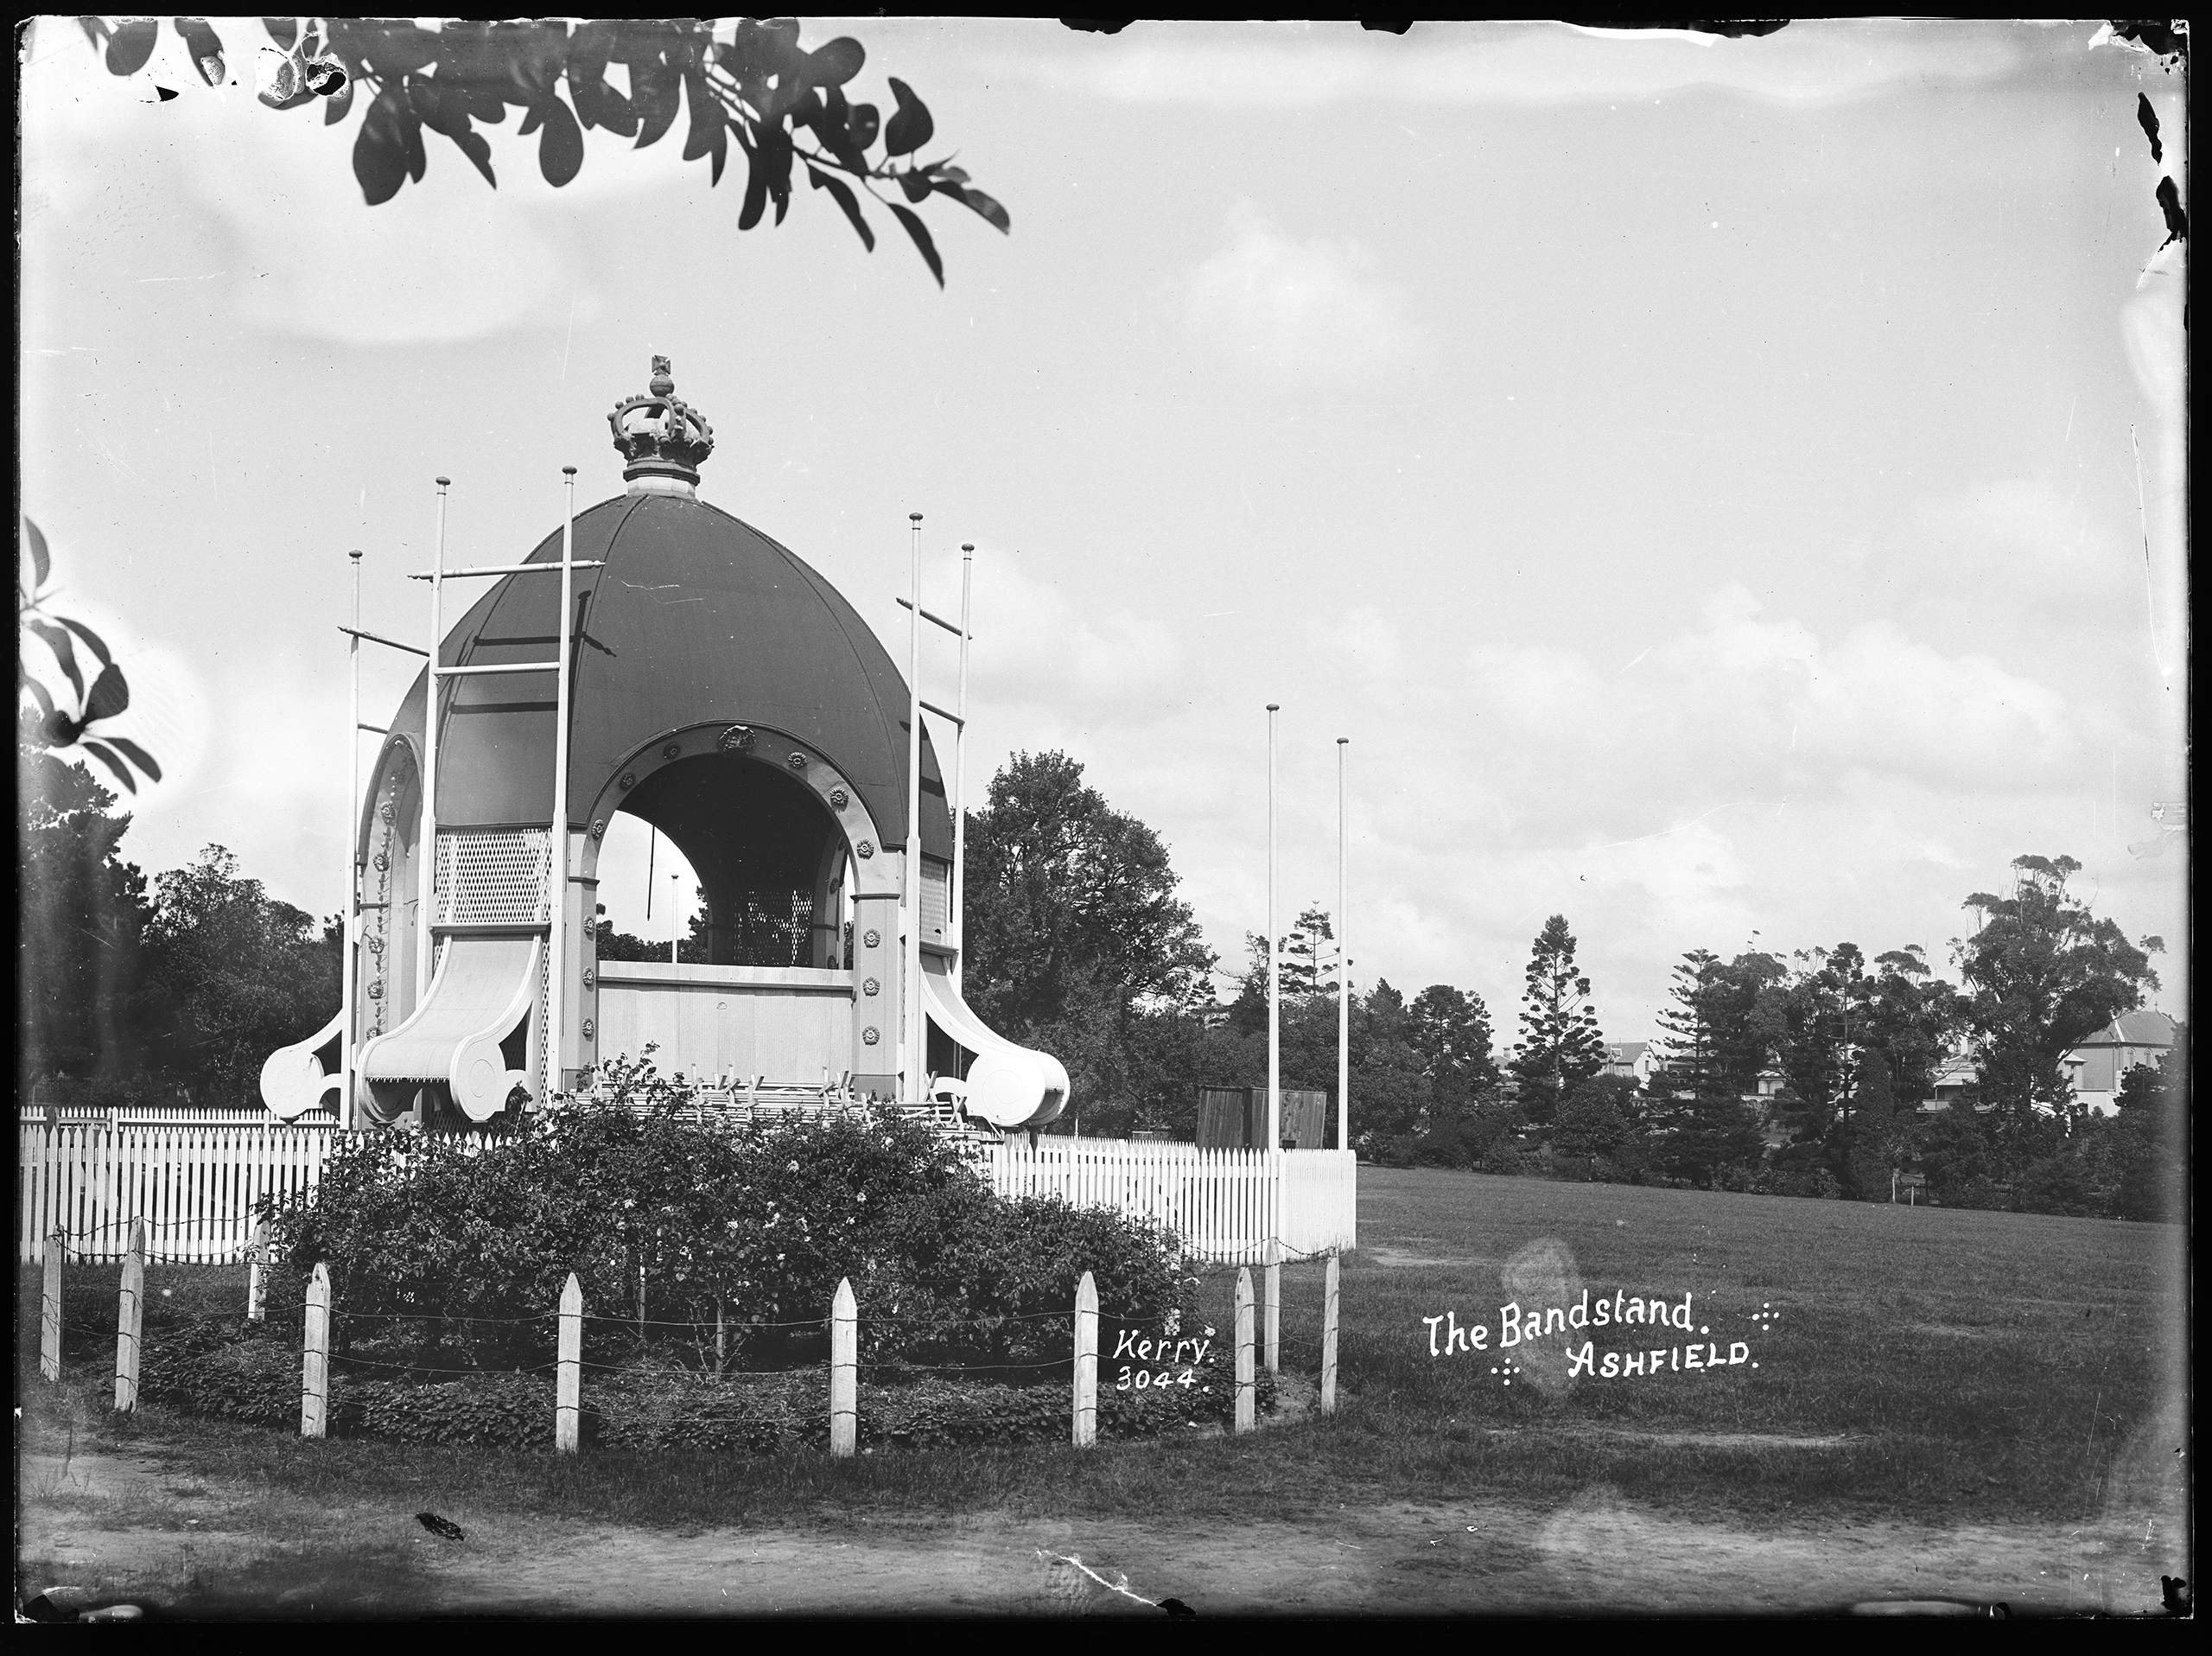 Glass plate negative of bandstand in Ashfield Sydney